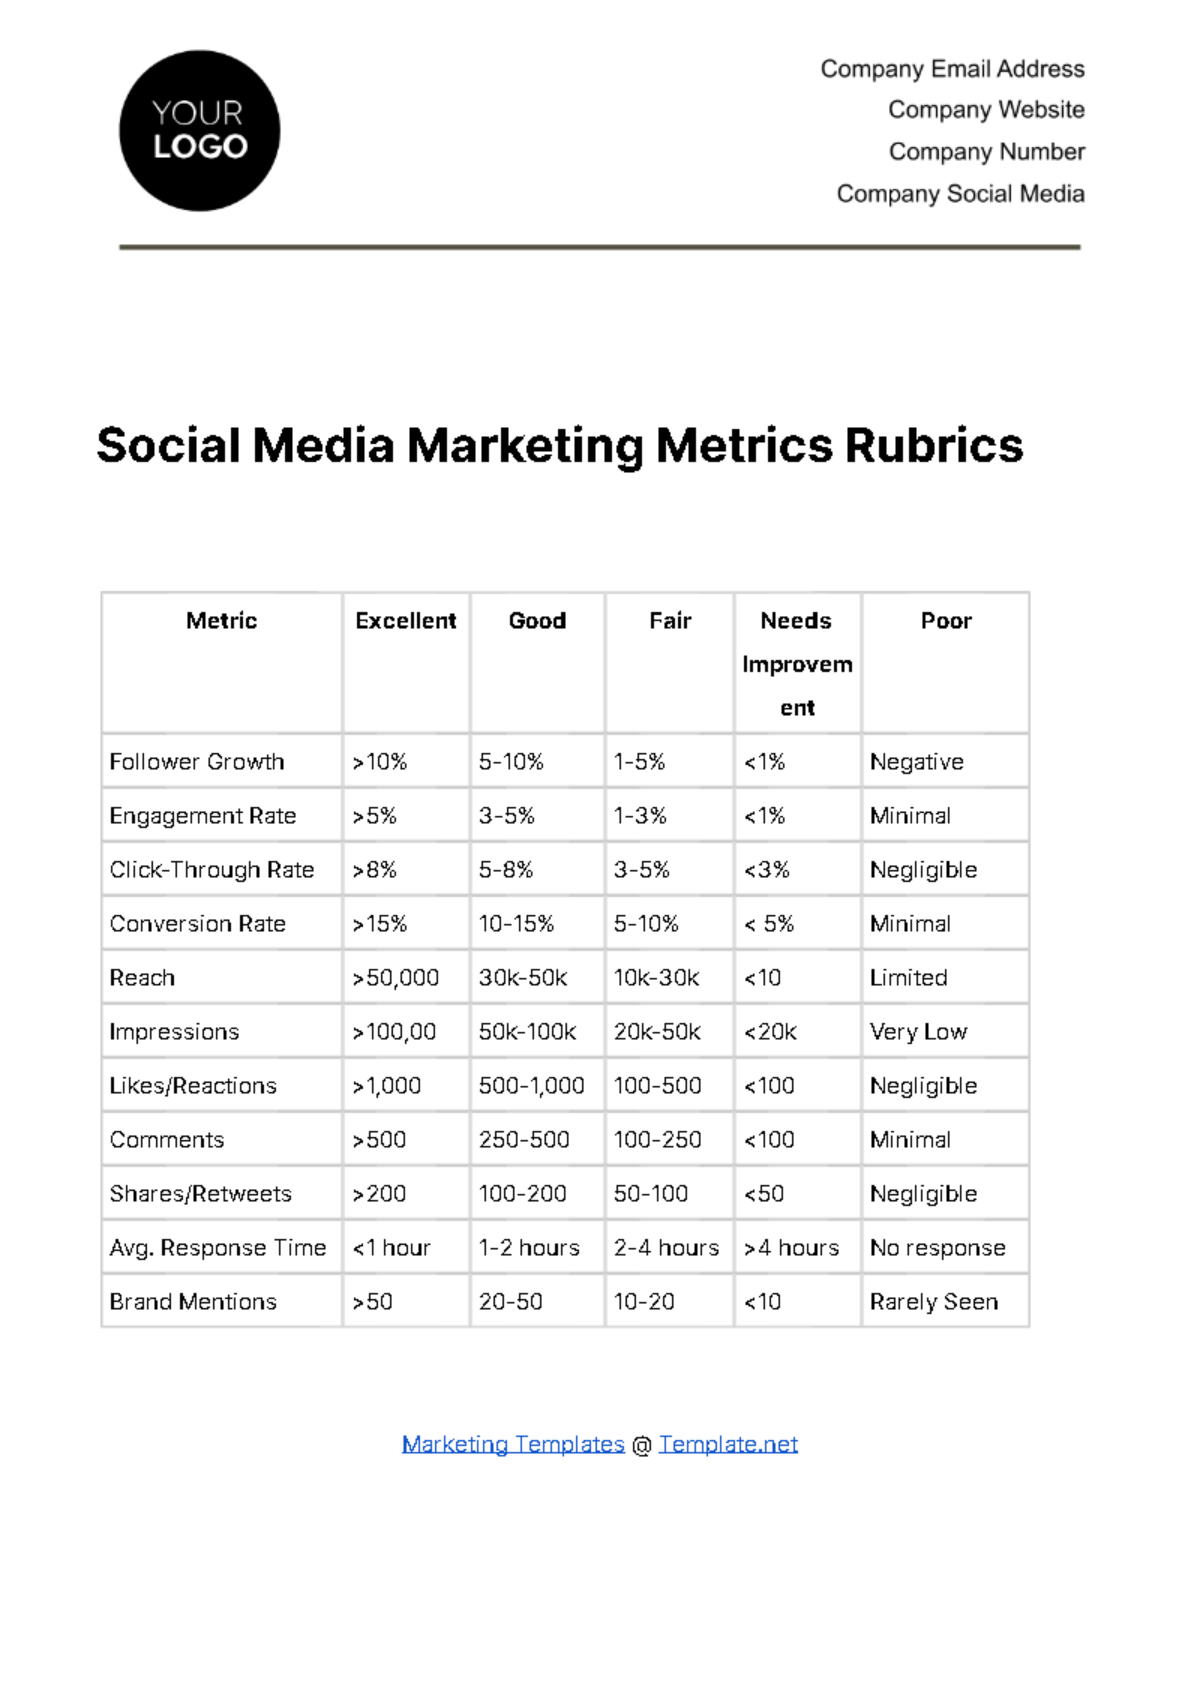 Social Media Marketing Metrics Rubric Template